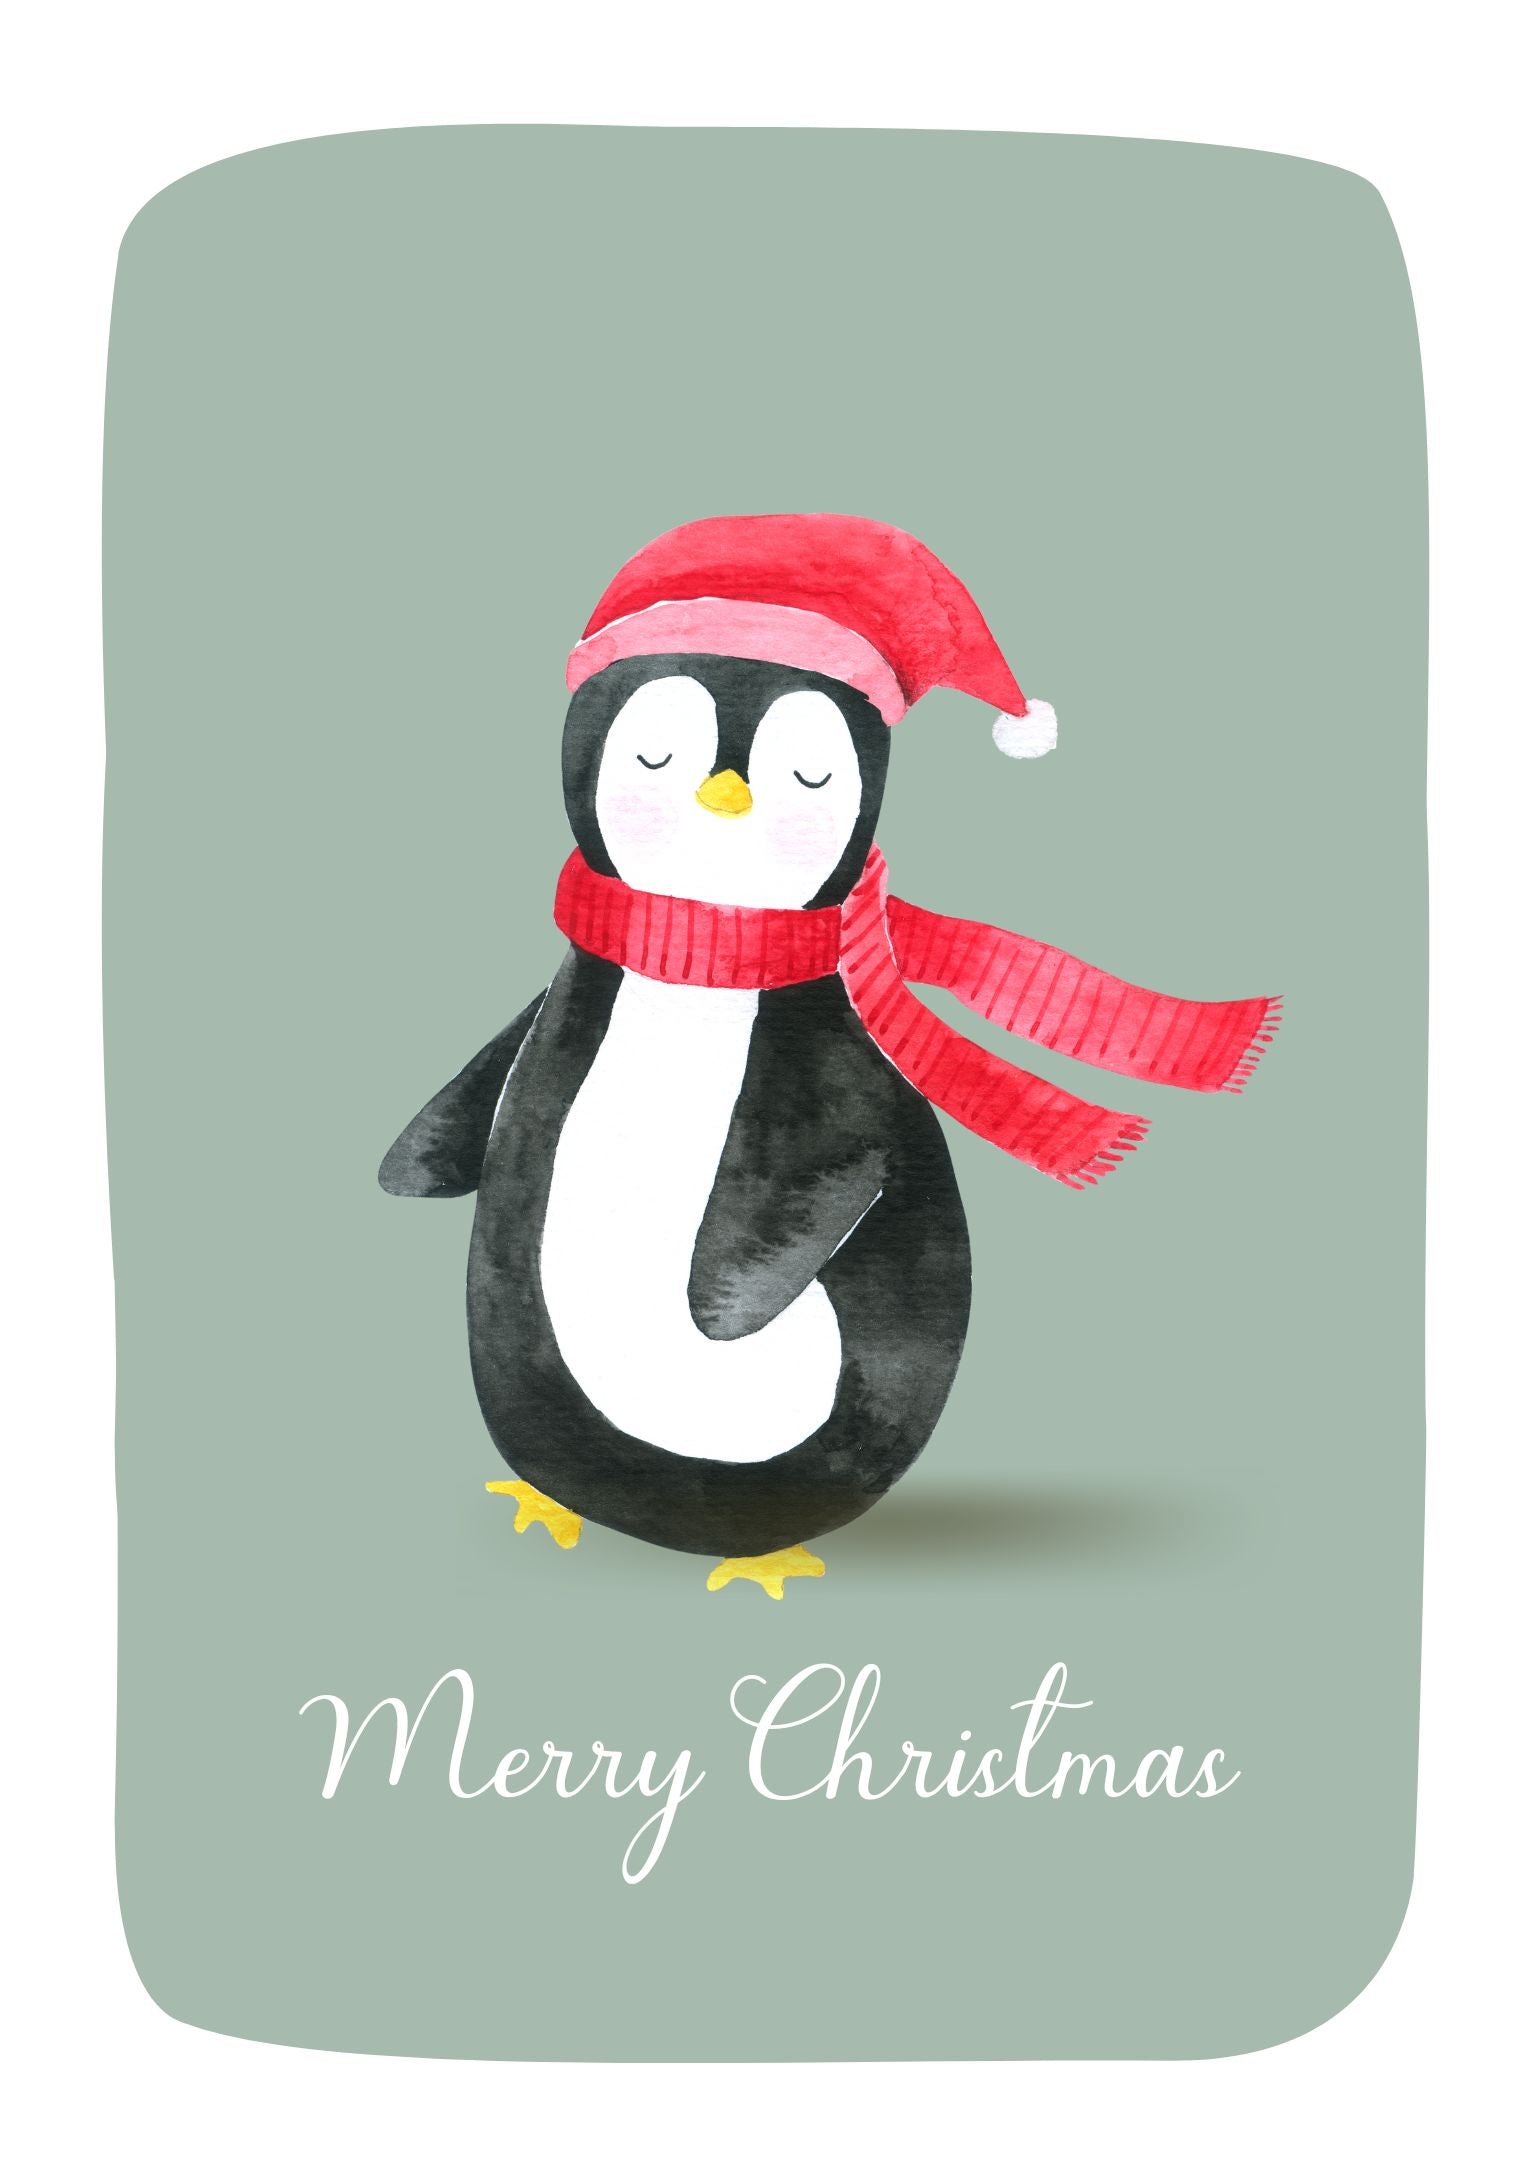 Merry Christmas Card with Llama Imposter - Xmas Card -Funny Christmas Card